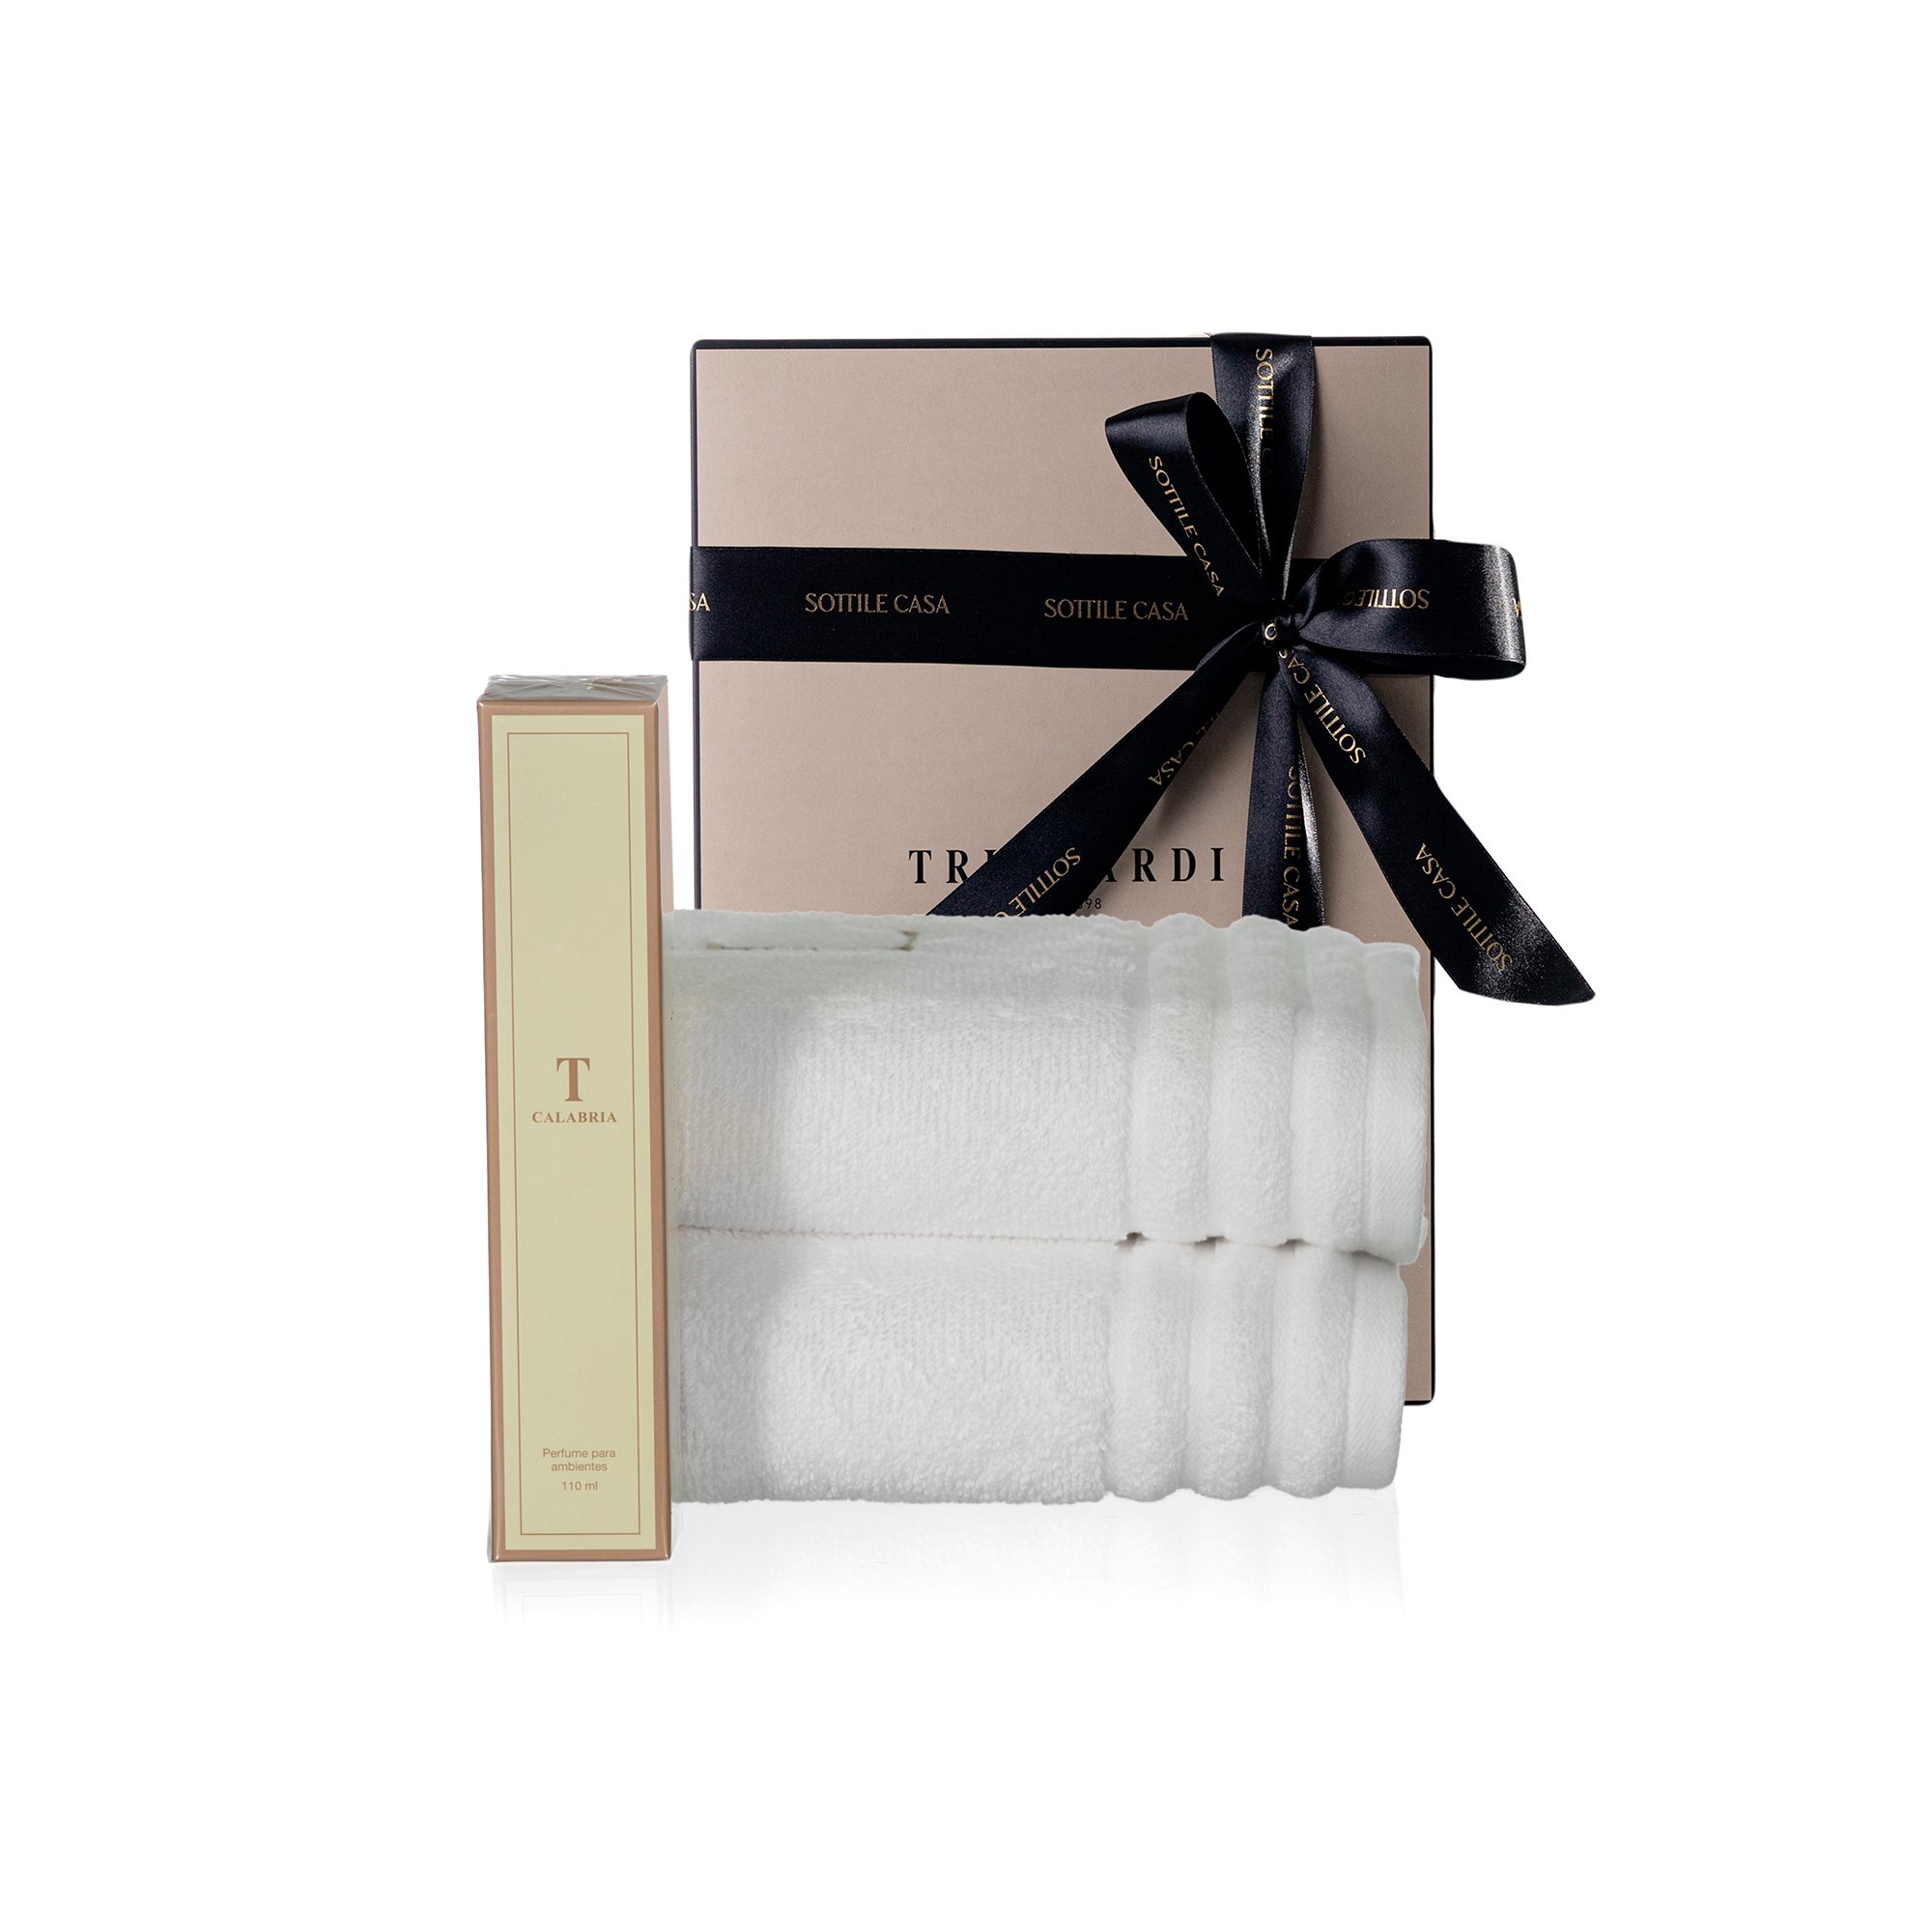 kit jogo 2 toalhas de lavabo algodao trussardi imperiale branco com perfume para ambientes trussardi 110ml calabria 3